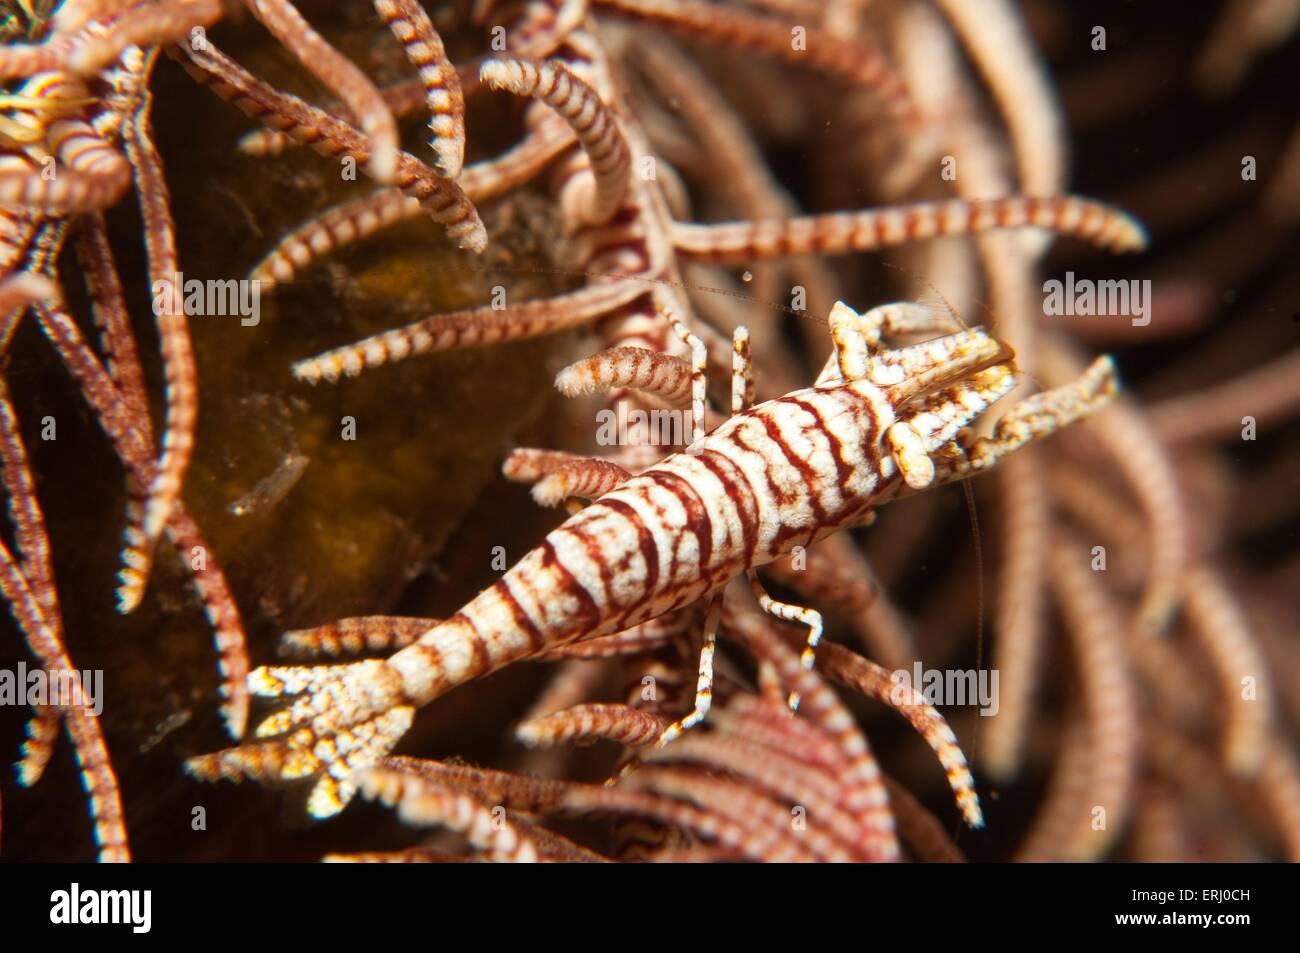 feather star shrimp Stock Photo